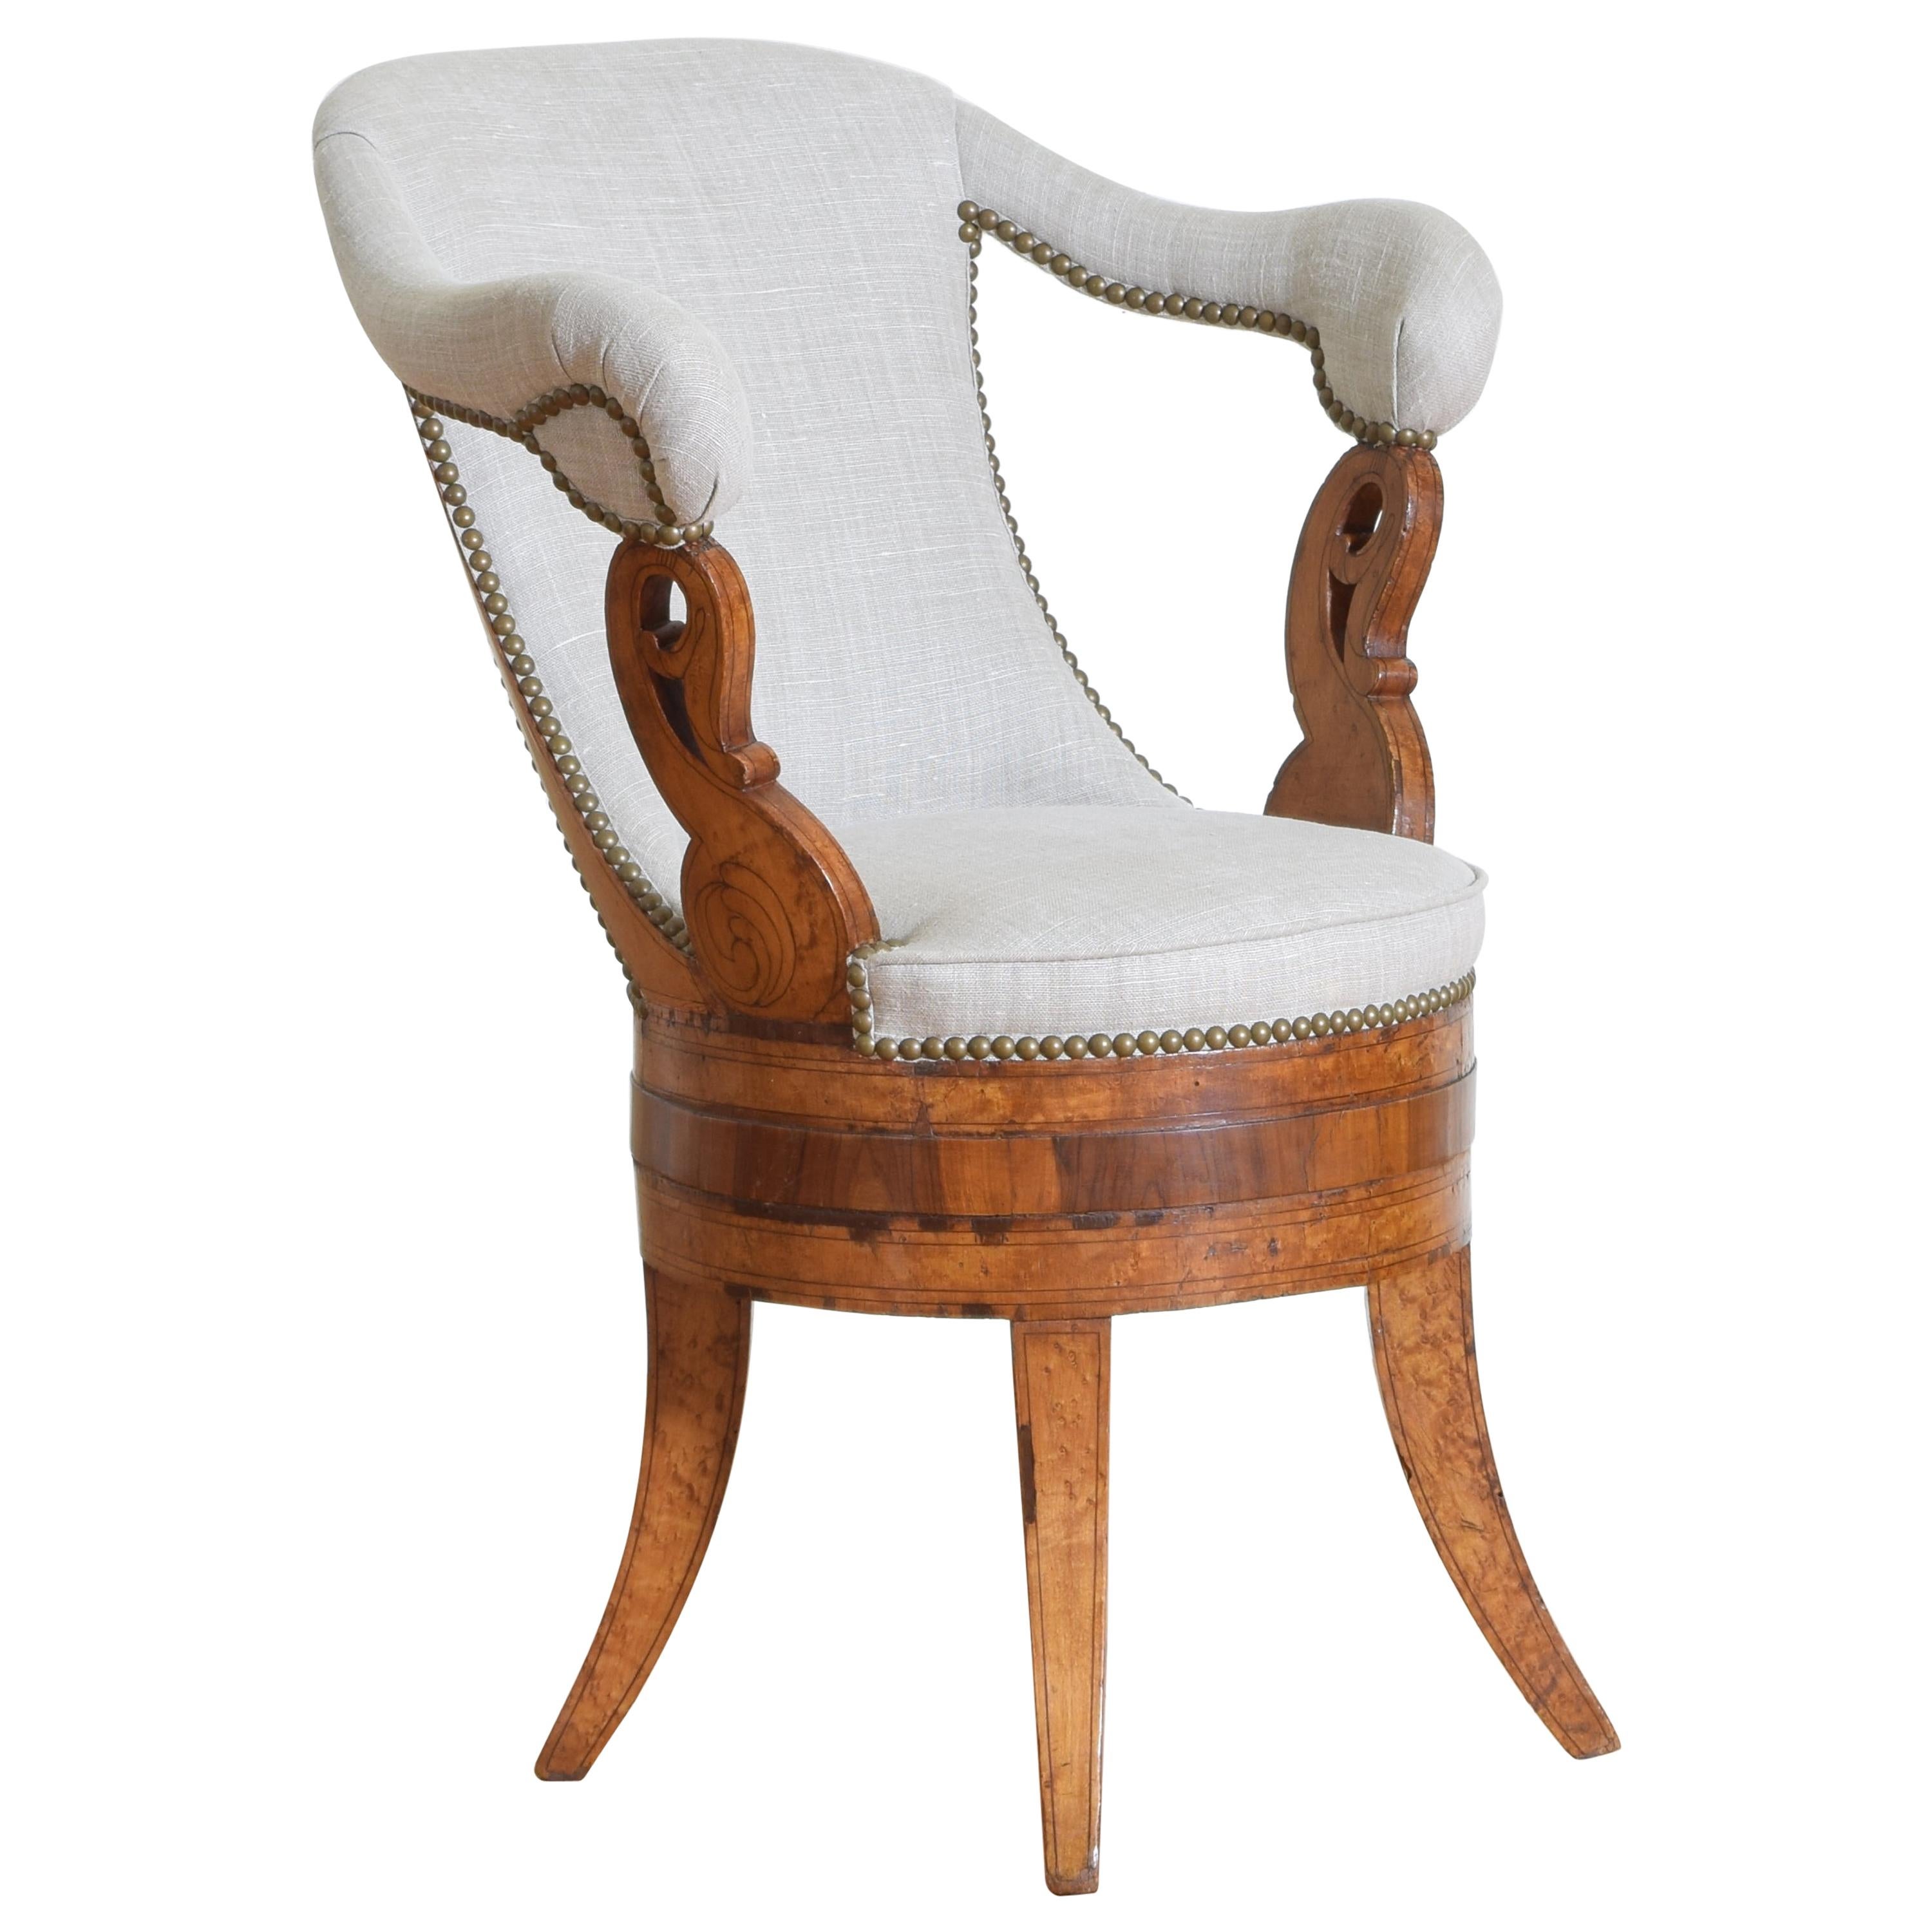 Italian Charles X Period Rosewood and Maple Veneered Armchair, circa 1830-1840